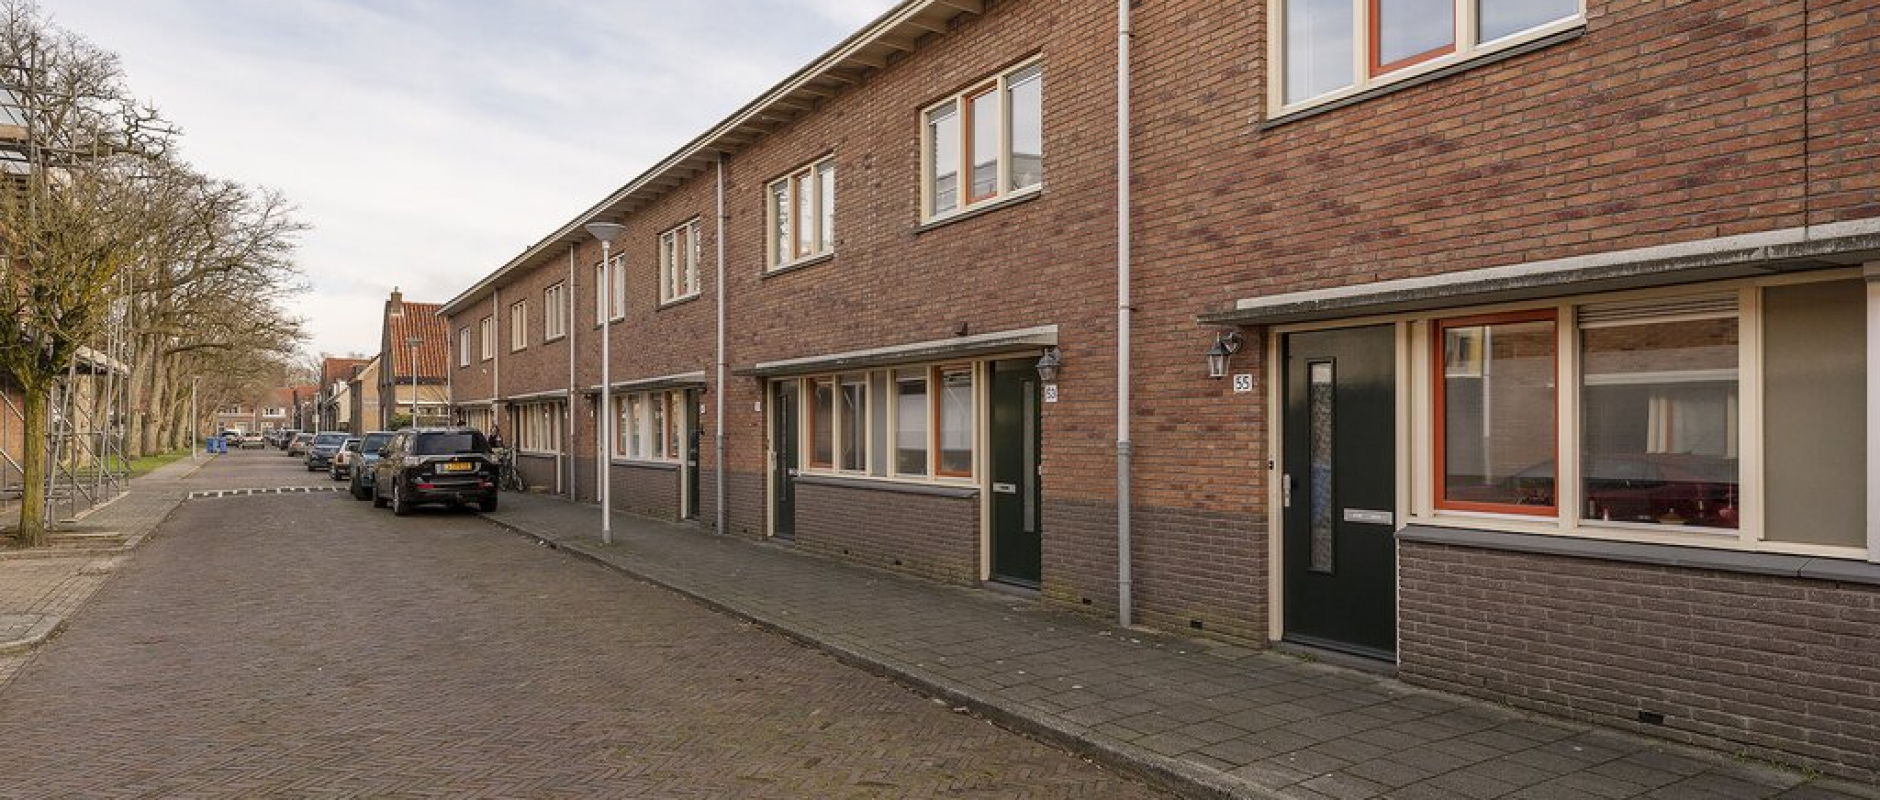 Woning te koop aan de Piet Heinstraat 55 te Zwolle